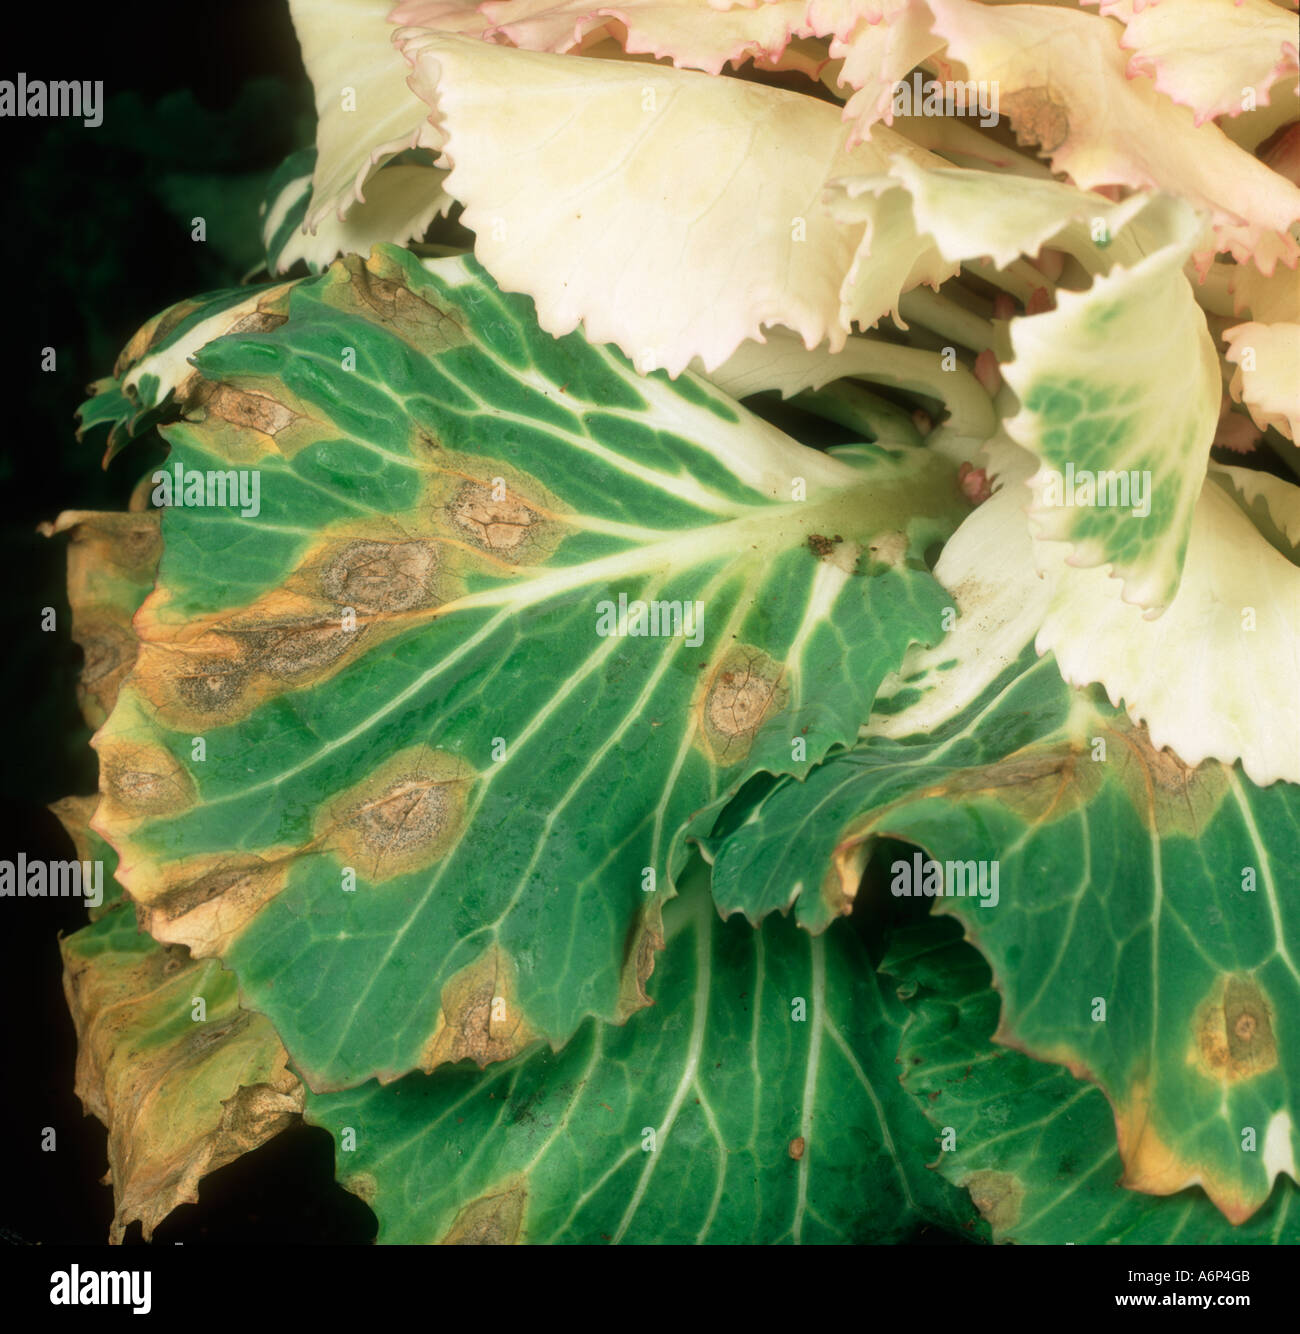 Ring spot Mycosphaerella brassicicola lesions on ornamental cabbage leaves Stock Photo